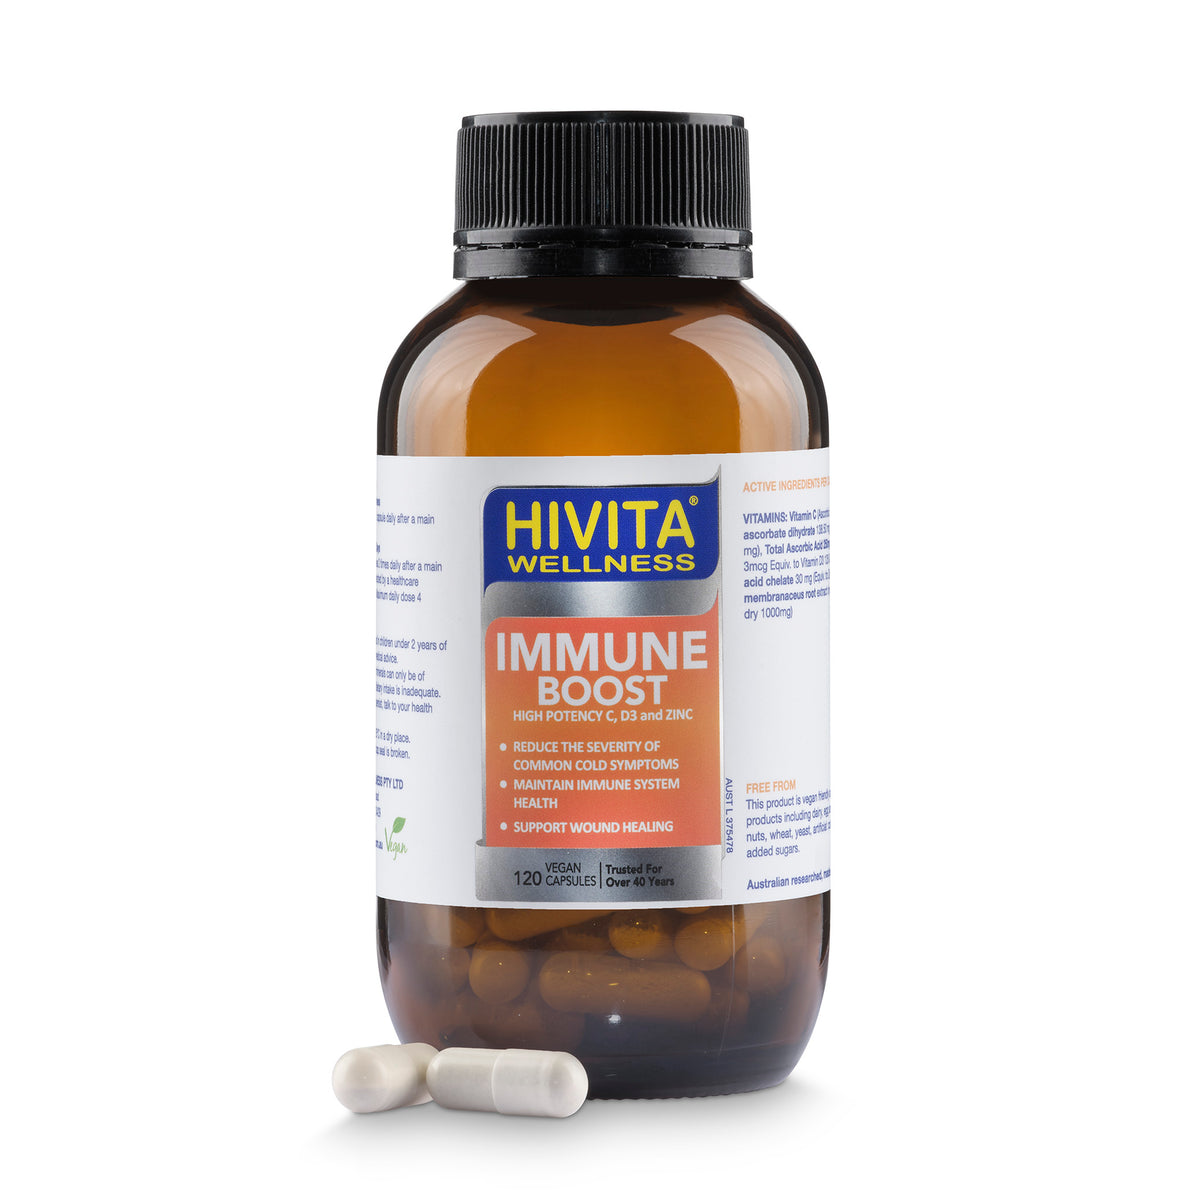 HIVITA Wellness Immune Boost (High Potency C, D3 and Zinc) 120 capsules